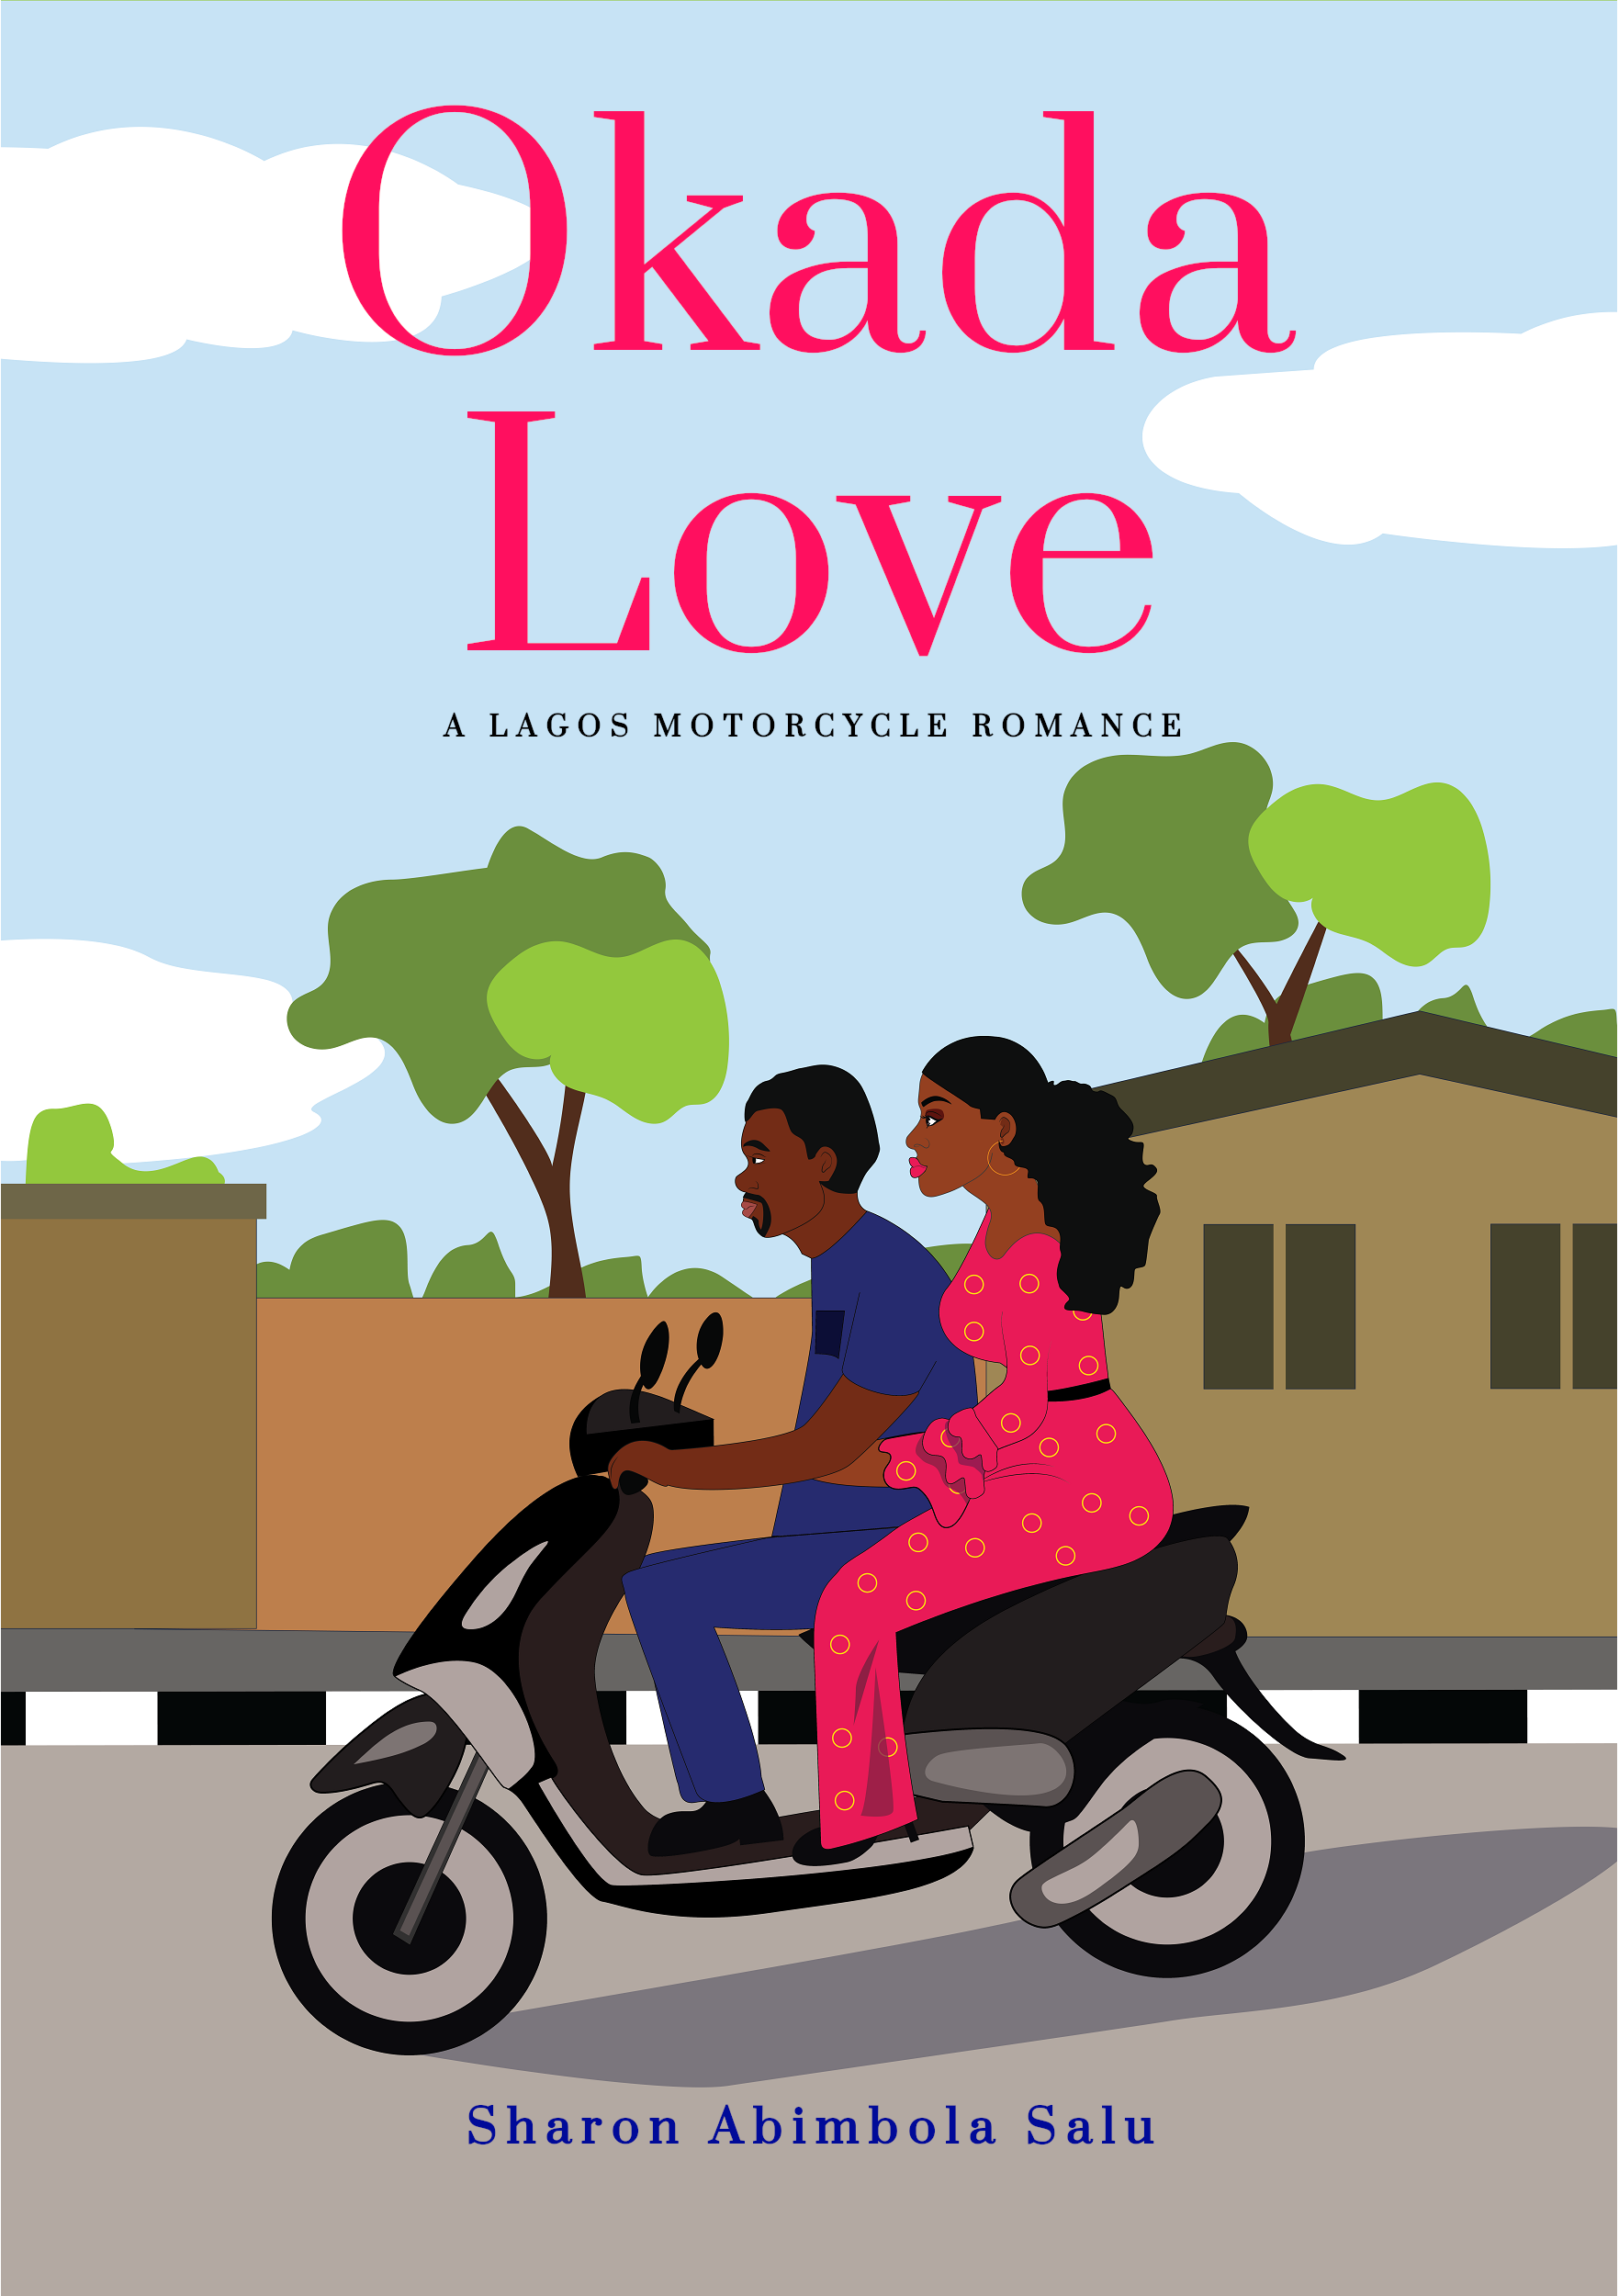 Okada Love - A Lagos Motorcycle Romance - eBook Cover for Nigerian Romance Short Story